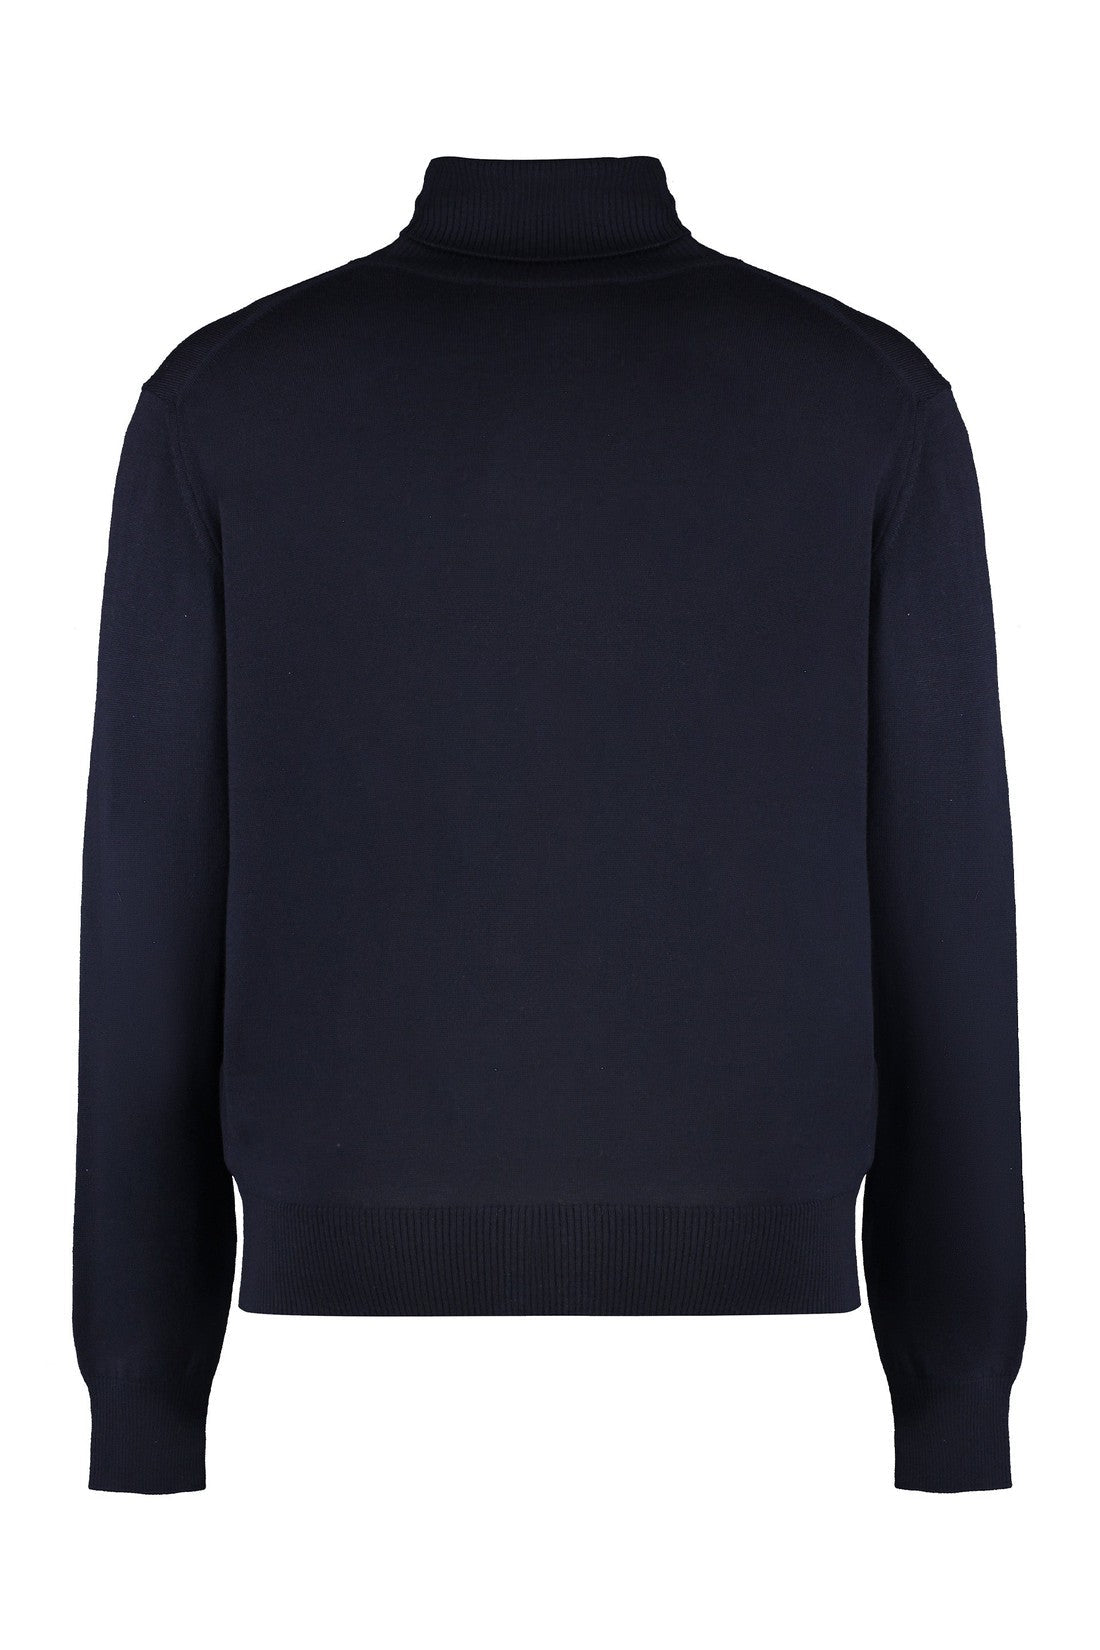 AMI PARIS-OUTLET-SALE-Turtleneck merino wool sweater-ARCHIVIST